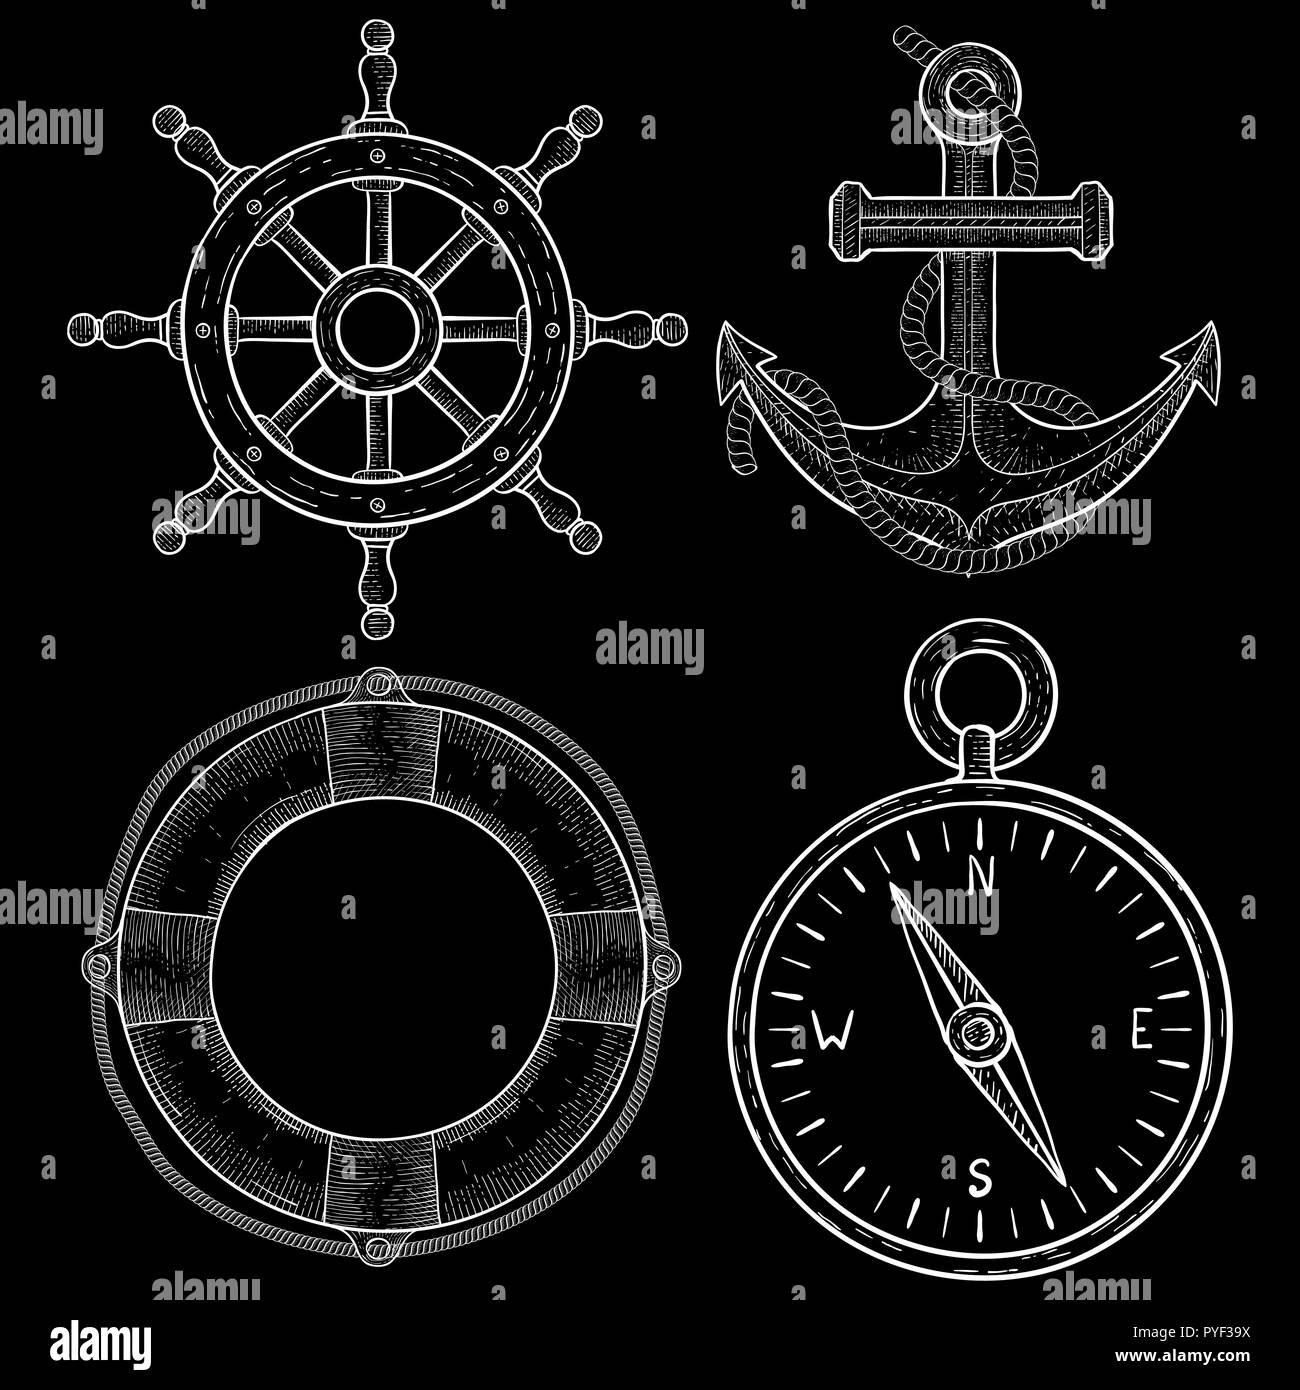 Sailing symbols - steering wheel, anchor, lifebuoy, compass. Hand drawn sketch Stock Vector